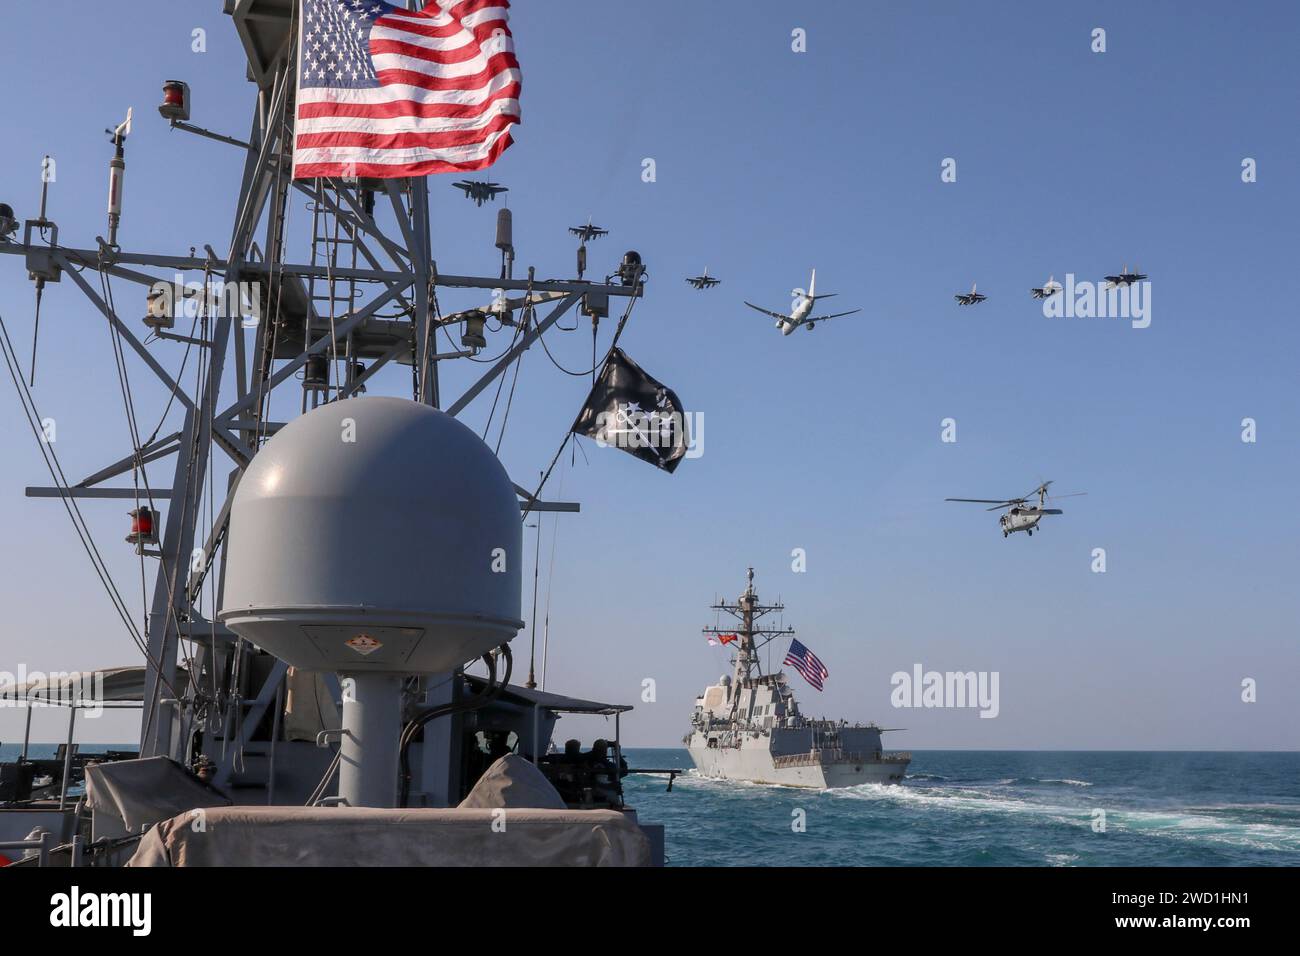 Royal Saudi Air Force jets and U.S. military aircraft fly above U.S. Navy ships USS Winston Churchill and USS Firebolt. Stock Photo